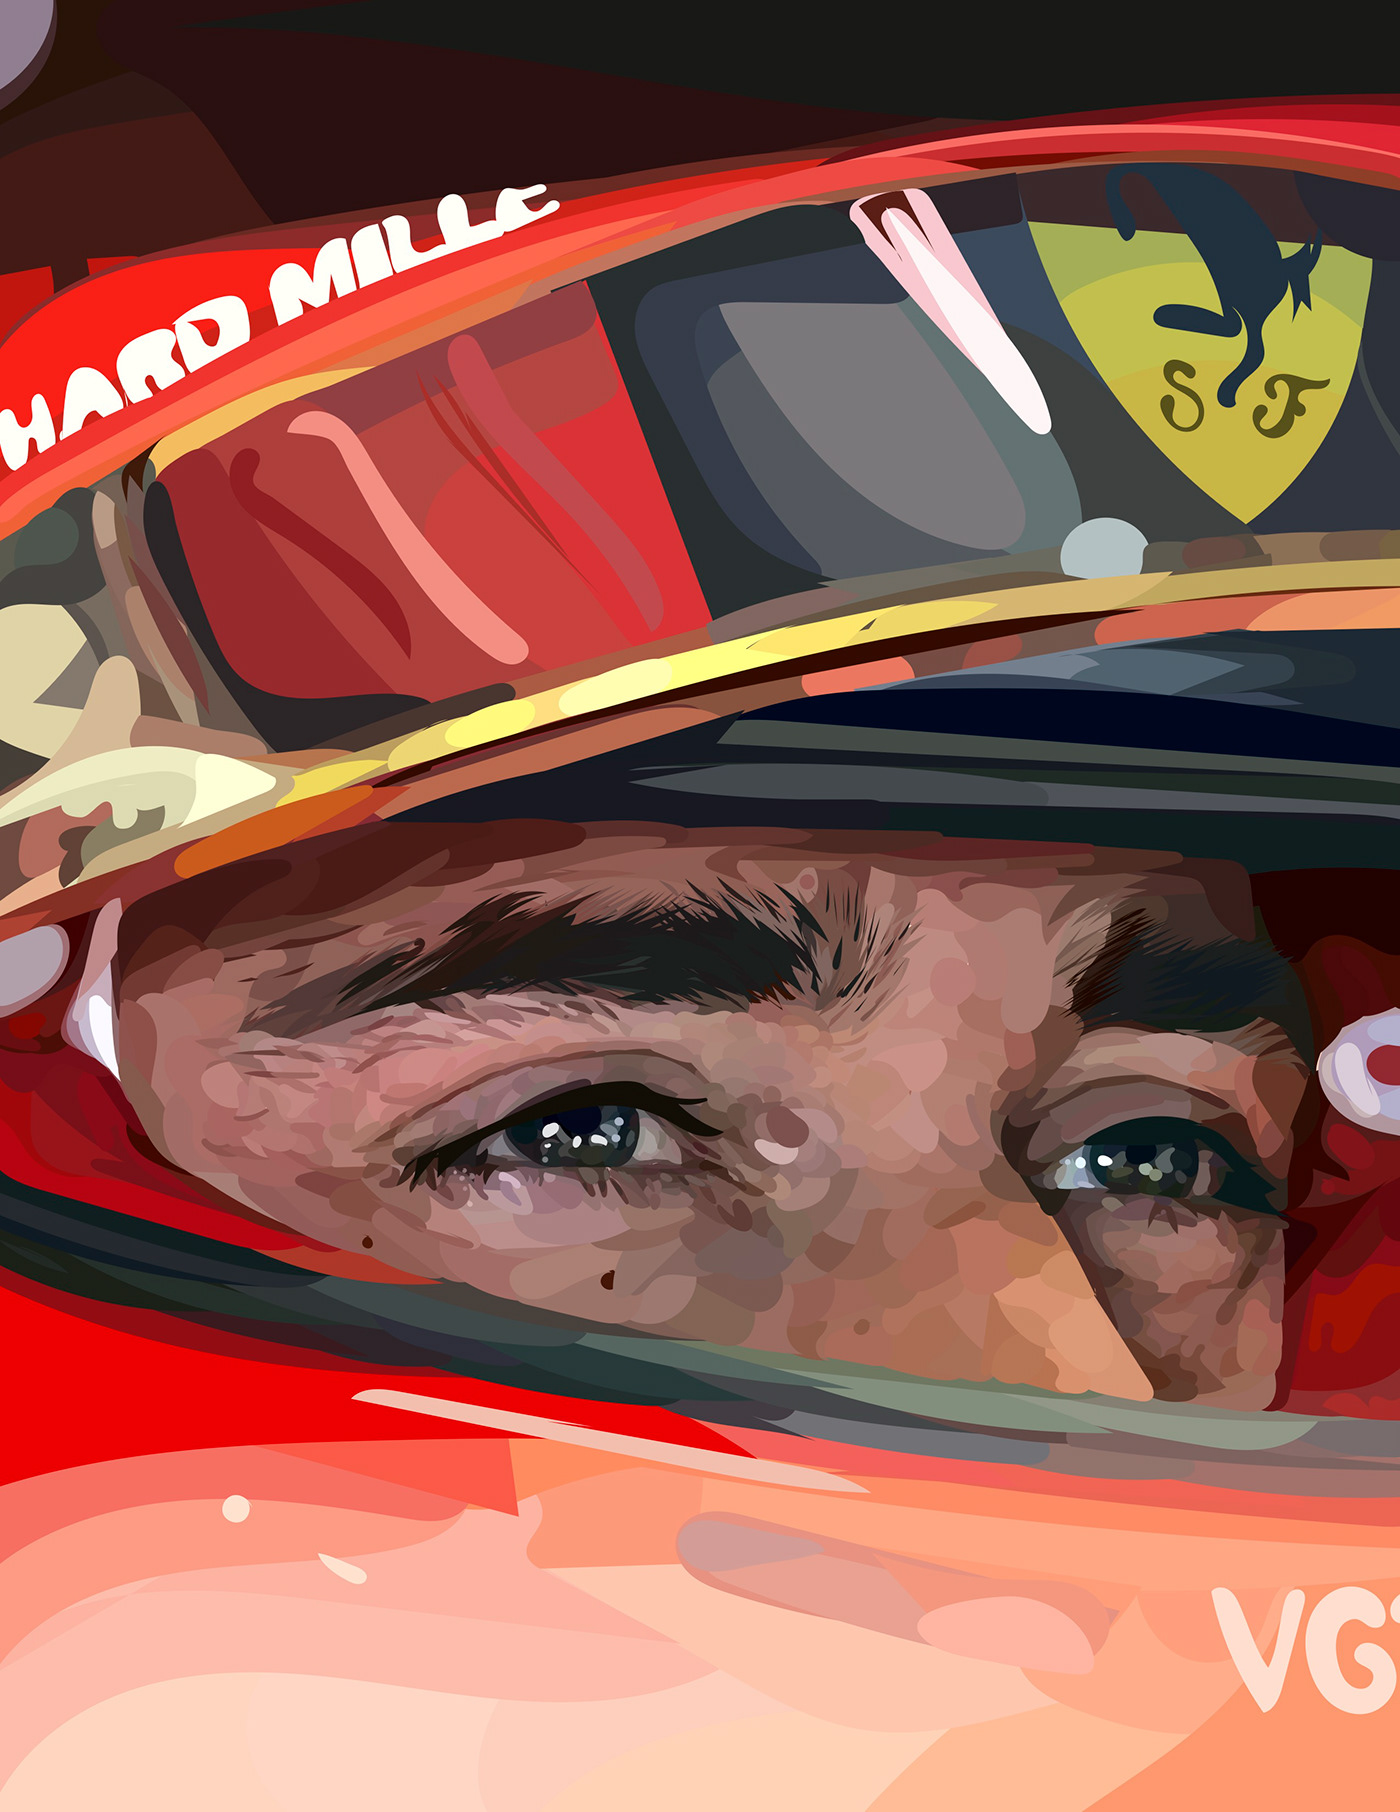 Charles Leclerc Formula 1 f1 Racing Motorsport image арт ILLUSTRATION  Digital Art  Graphic Designer